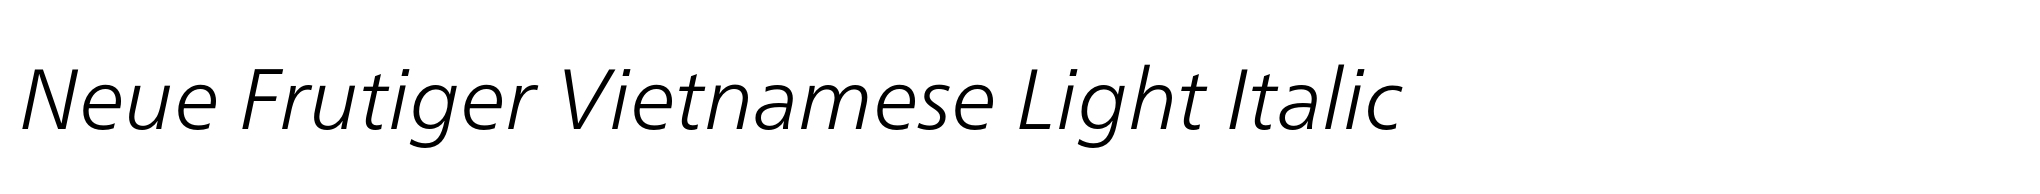 Neue Frutiger Vietnamese Light Italic image